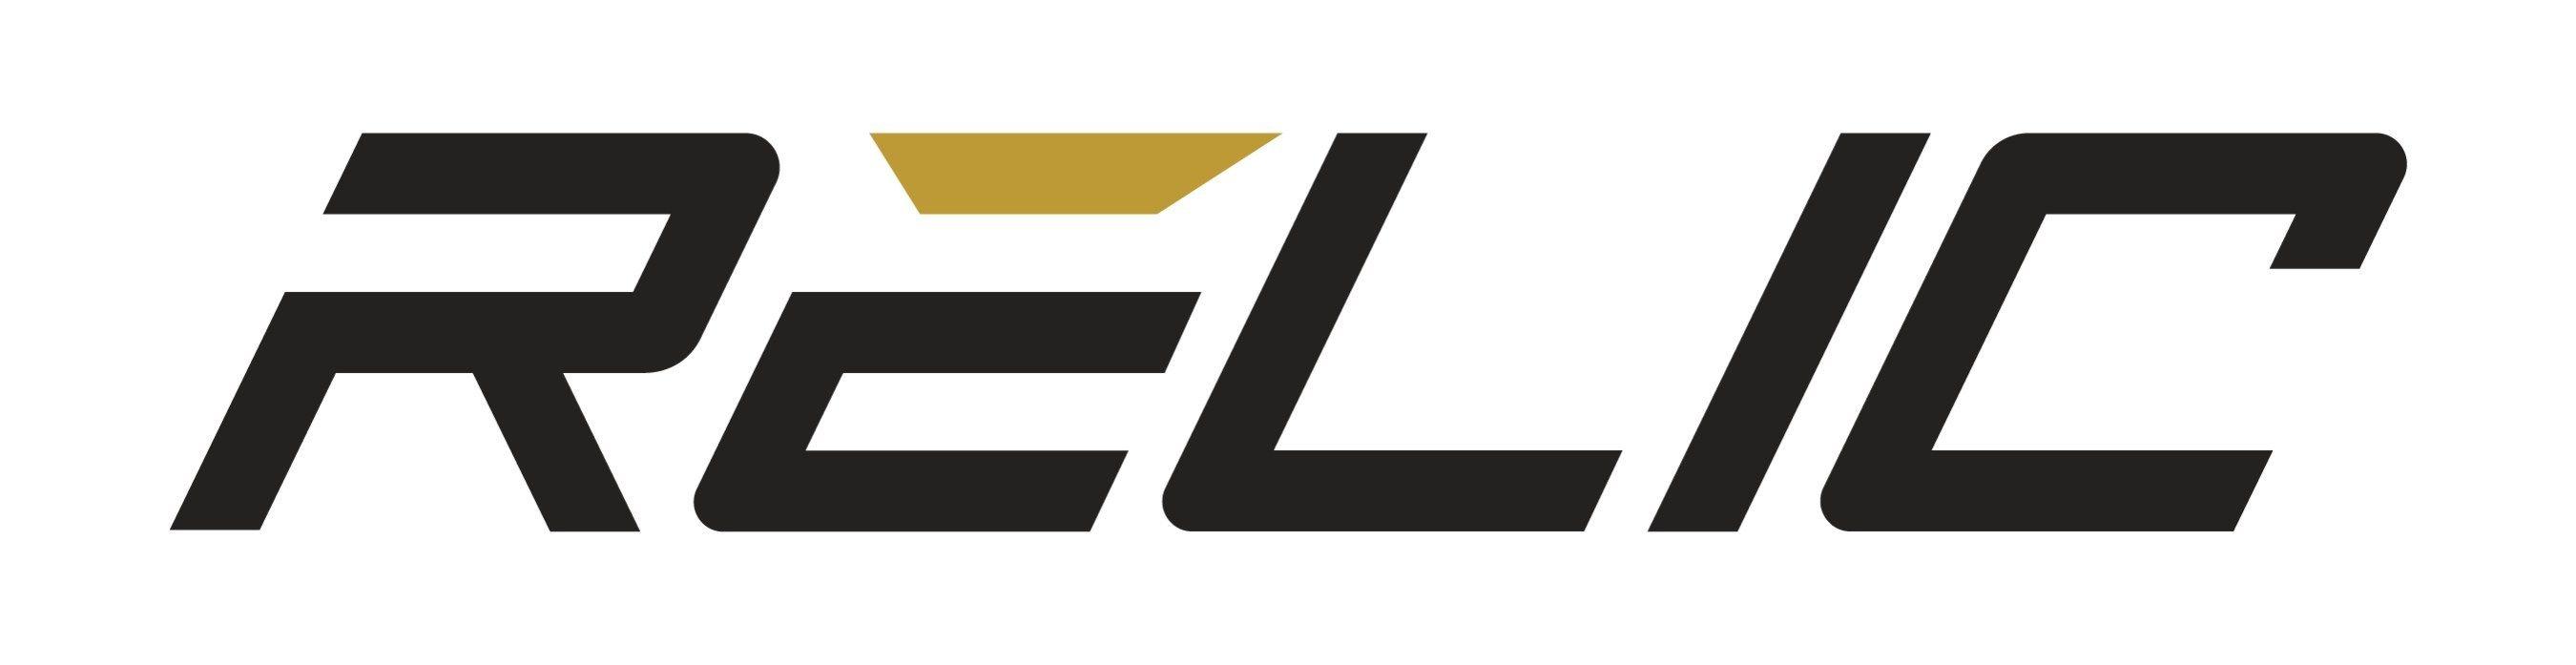 Relic Logo - Advertising agency Sorenson rebrands as Relic